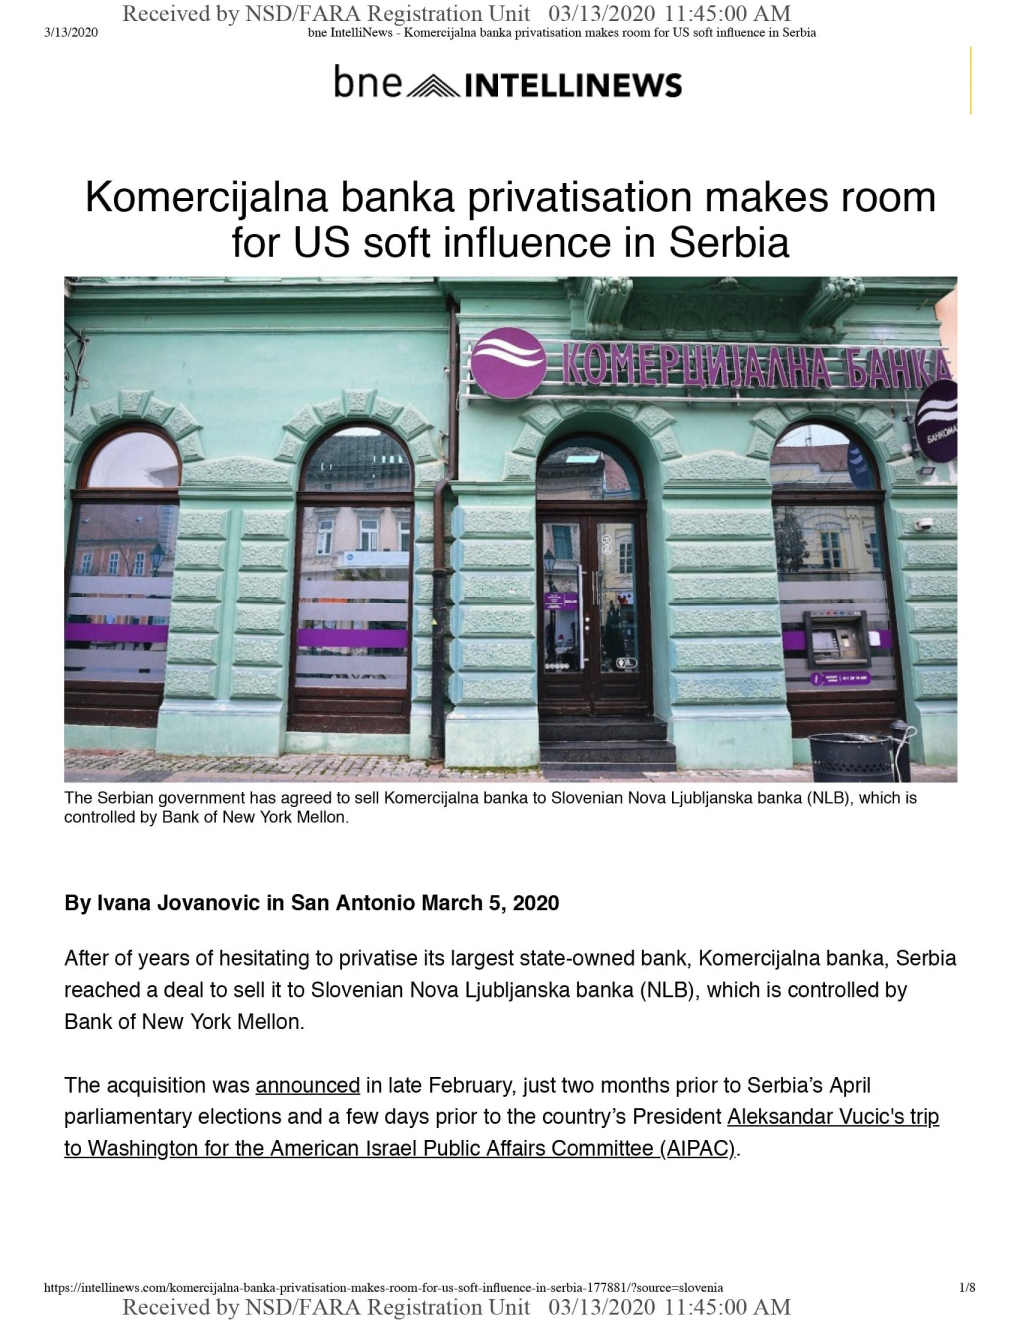 Komercijalna Banka Privatisation Makes Room for US Soft Influence in Serbia Bne^INTELLINEWS